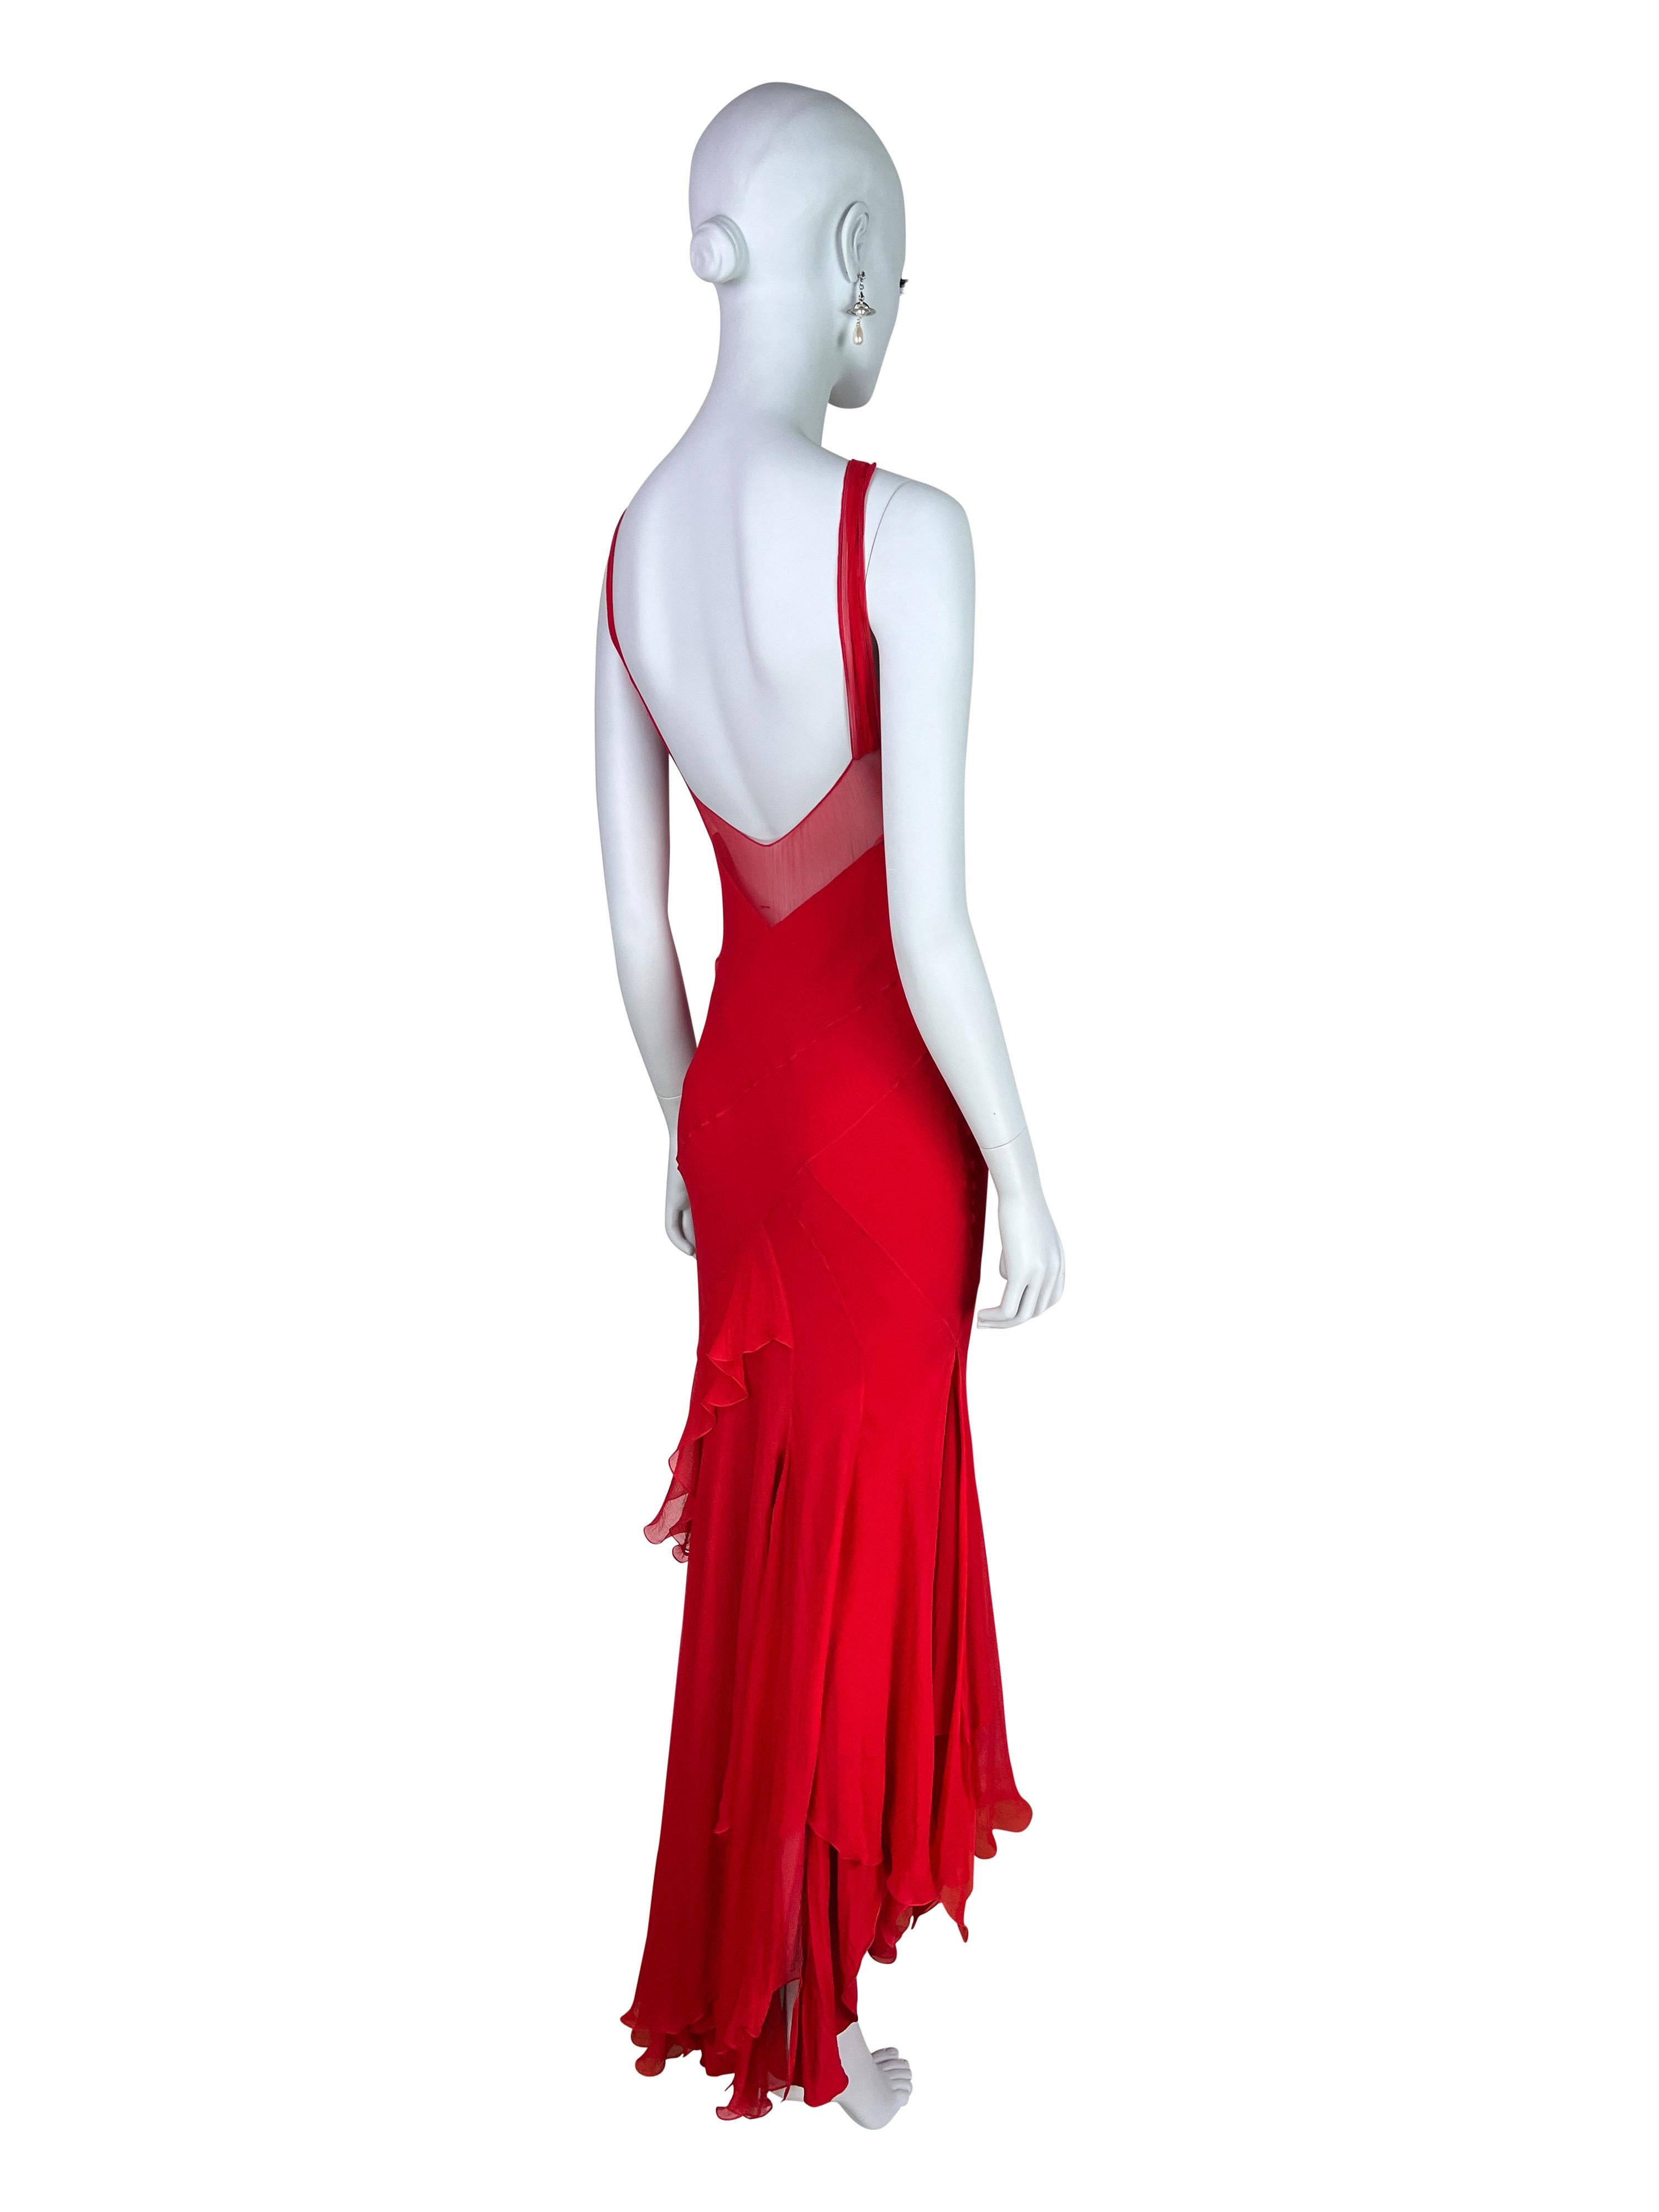 Dior by John Galliano Spring 2004 Red Bias Cut Silk Chiffon Dress 5